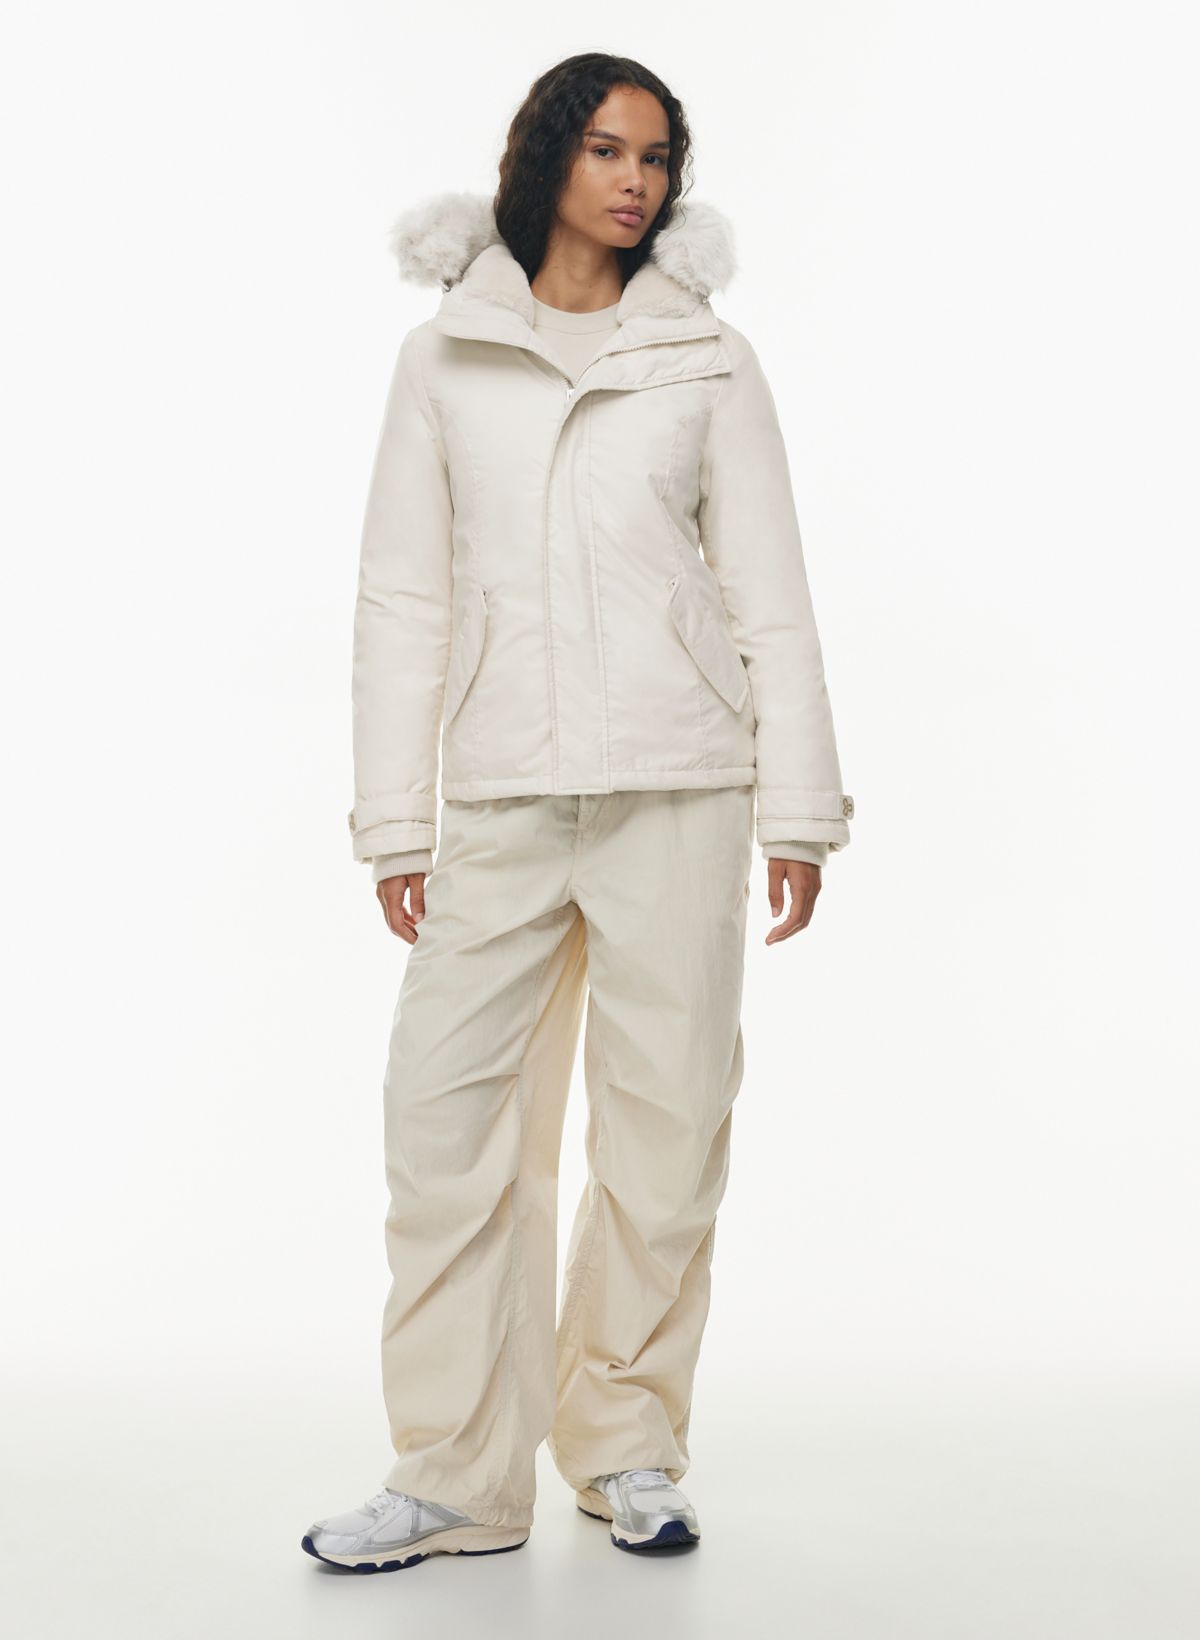 Men's Puffer Jacket Waterproof Winter Parka jacket Warm Thicken Ski Coat :  : Clothing, Shoes & Accessories